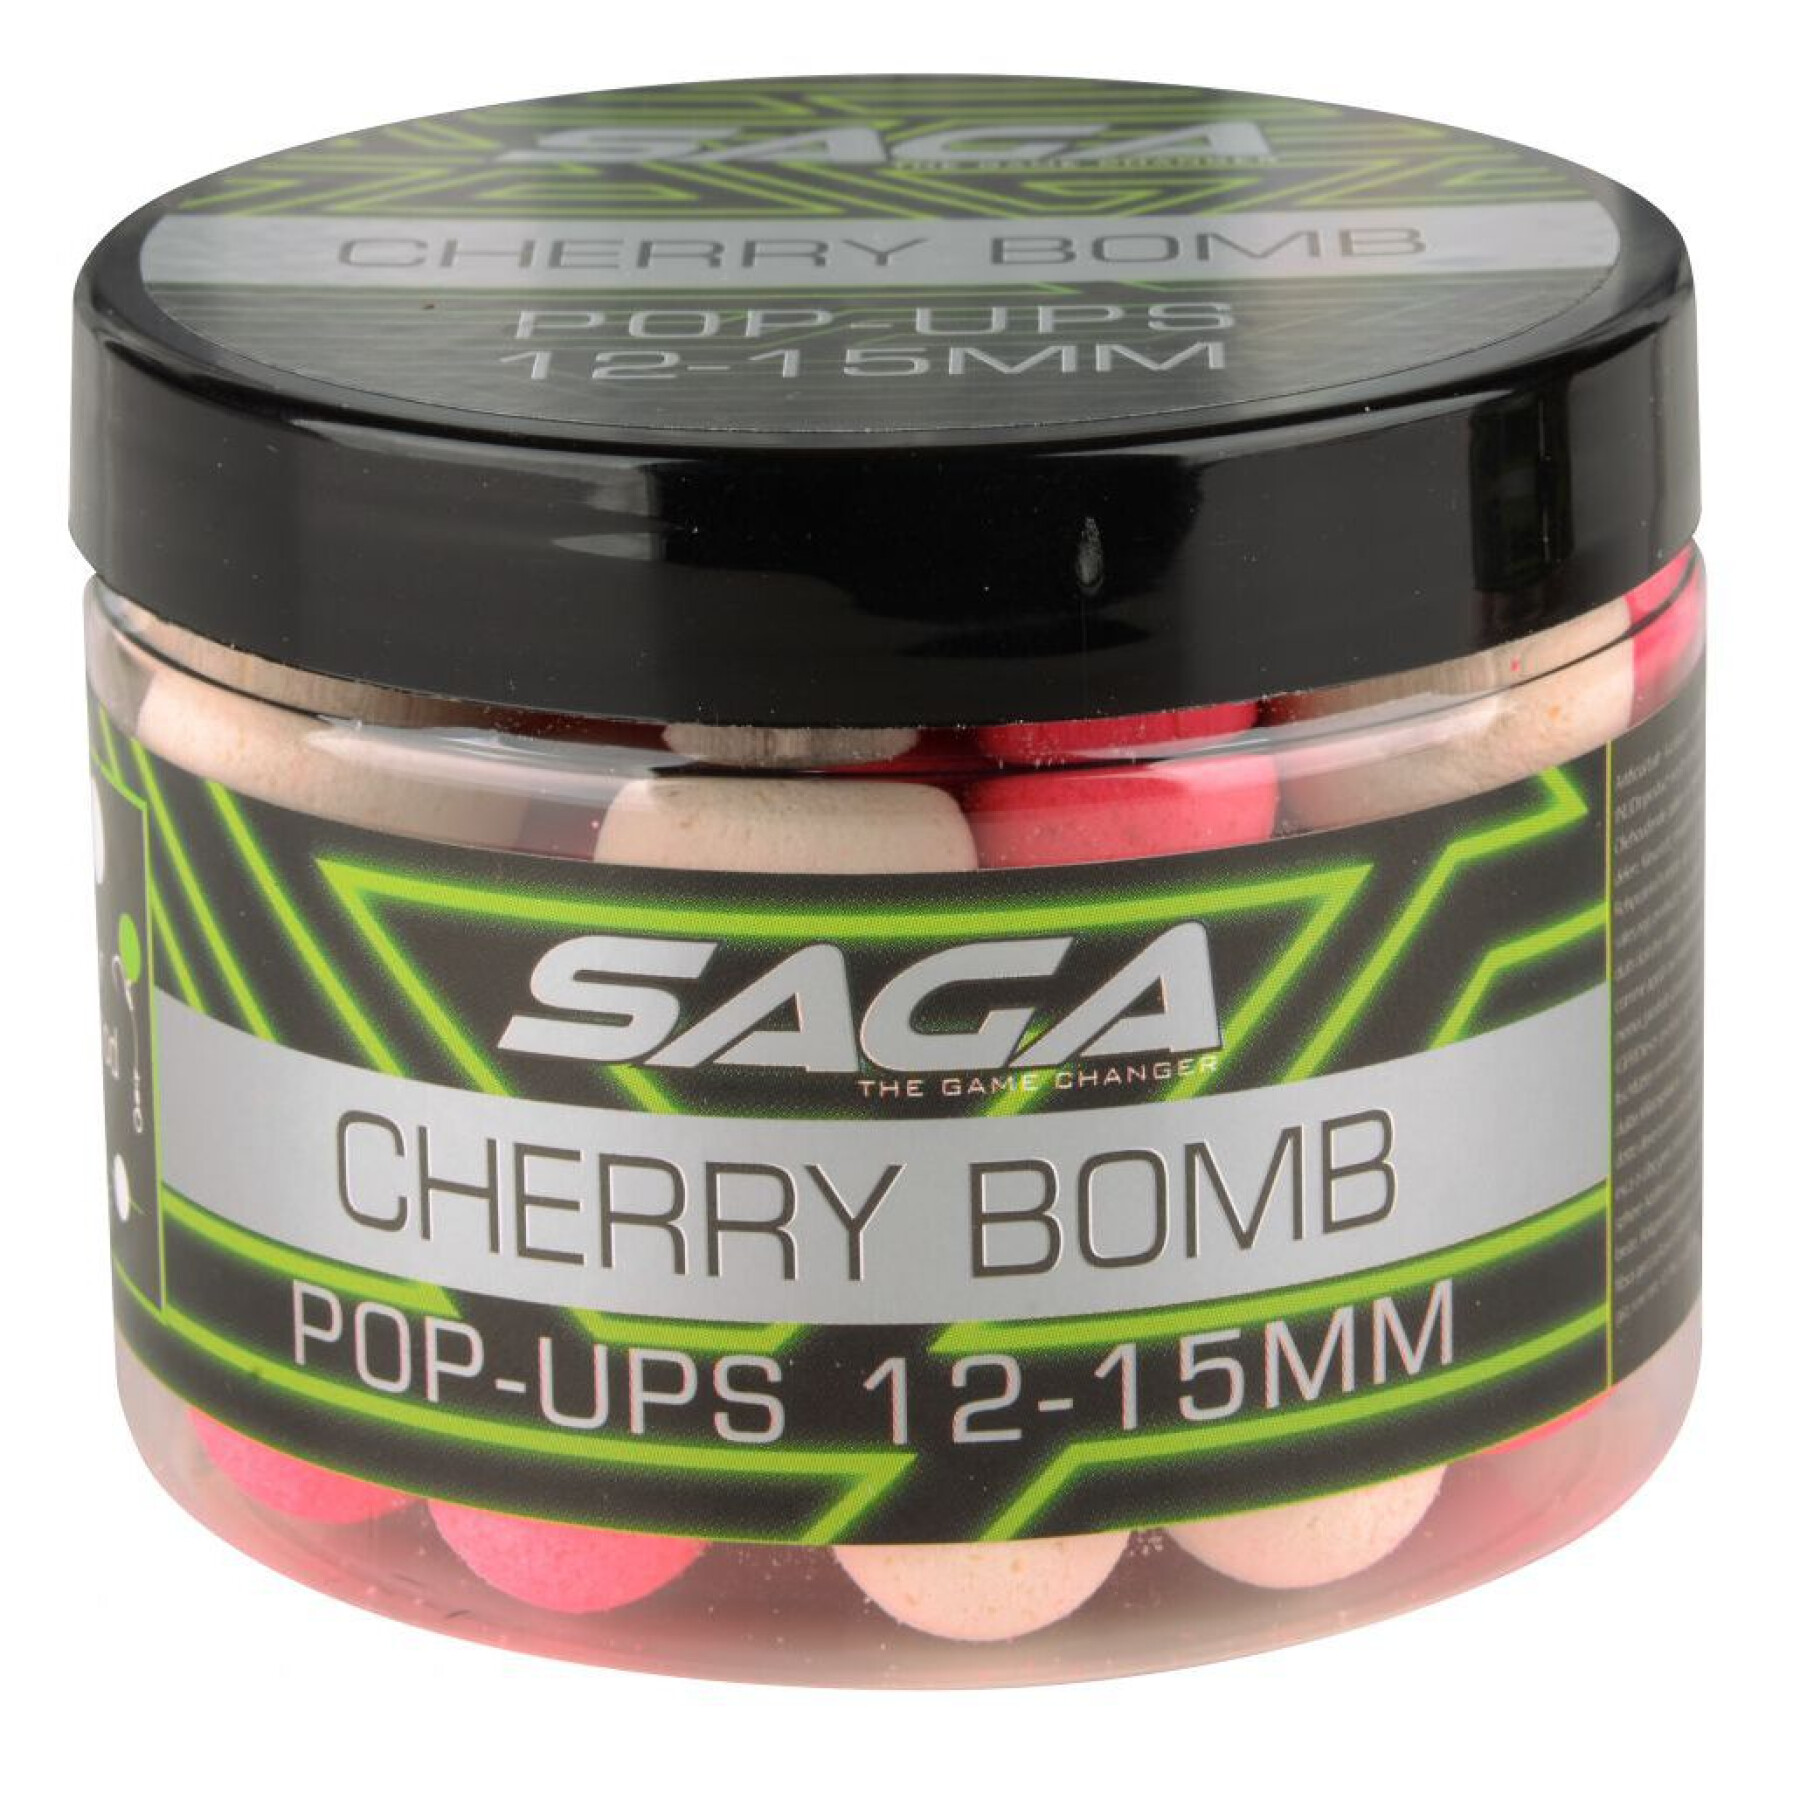 Pop-ups Saga Cherry Bomb 50g